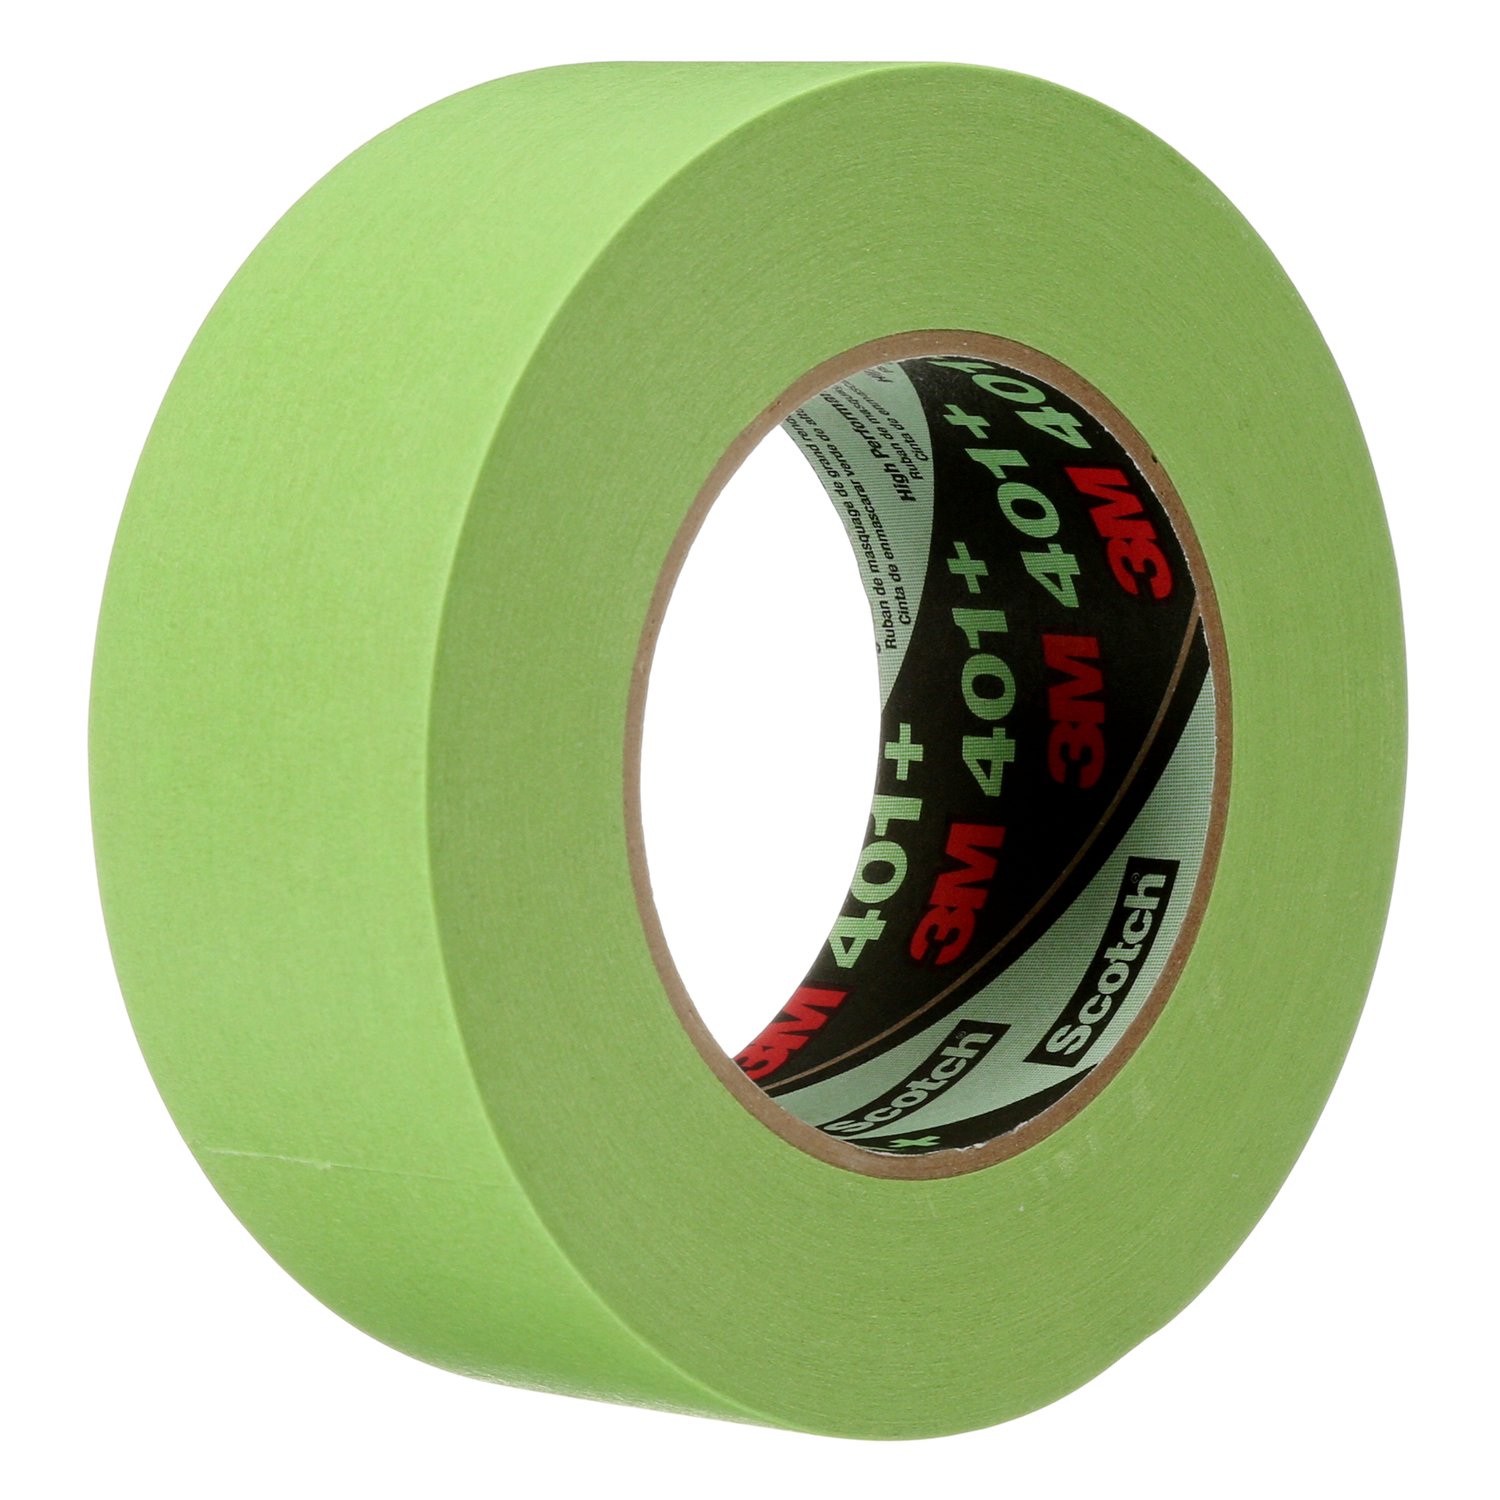 Green Carton Sealing Tape - 2 X 110 Yards (48mm X 100m) -    Shipping Boxes, Shipping Supplies, Packaging Materials, Packing Supplies